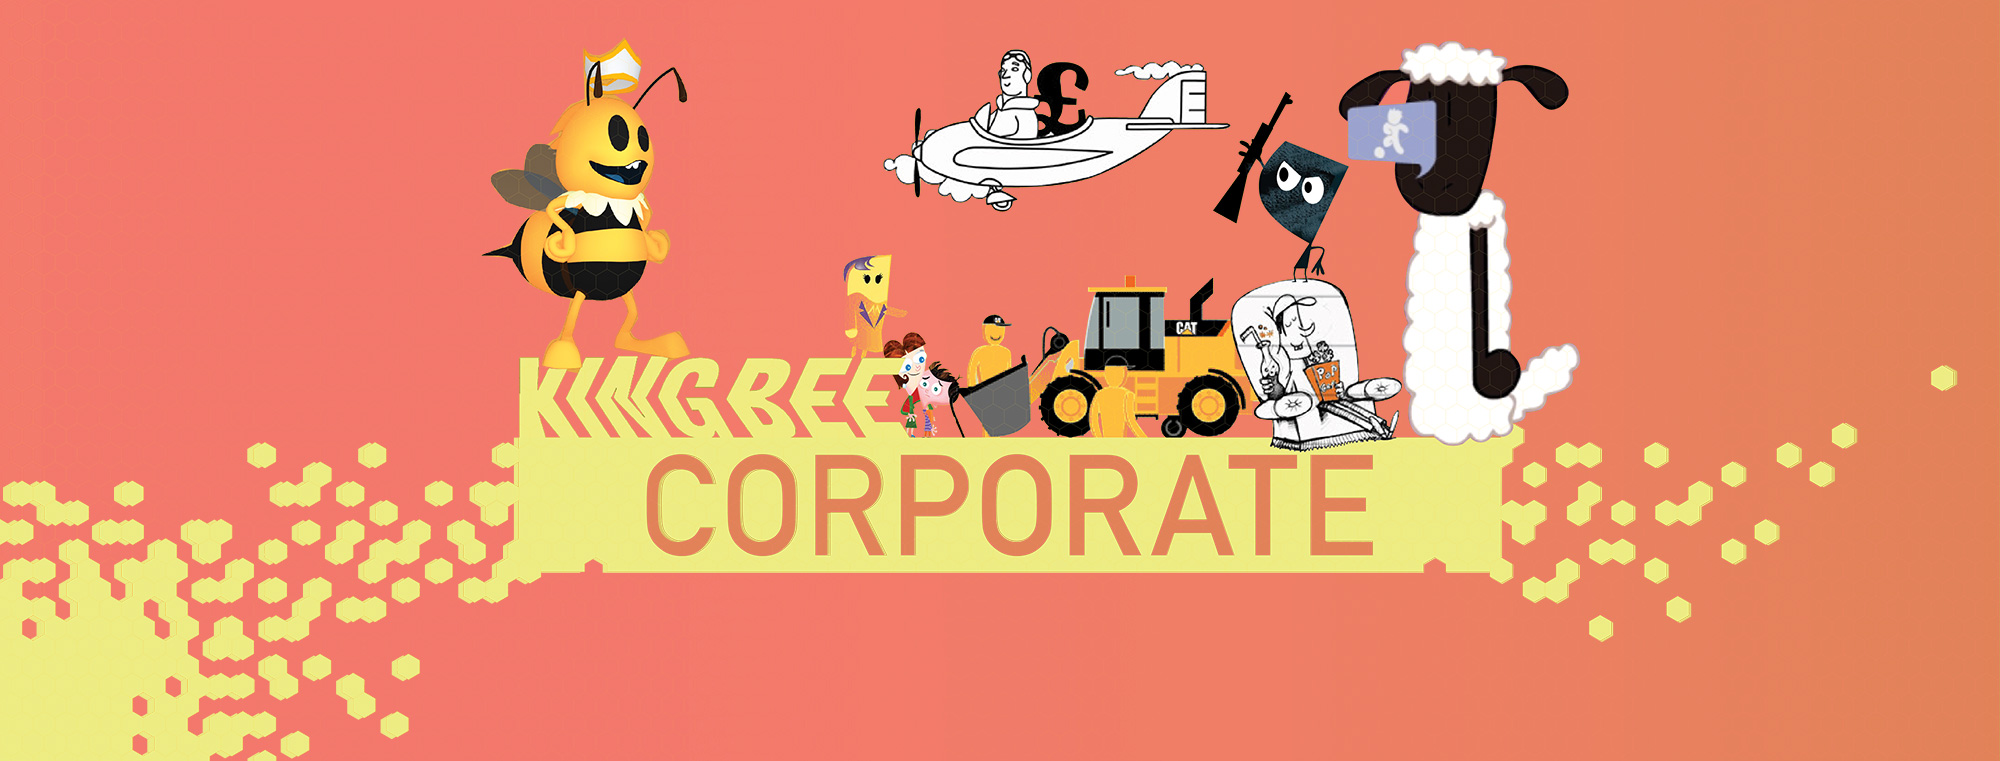 Corporate Animated Videos |